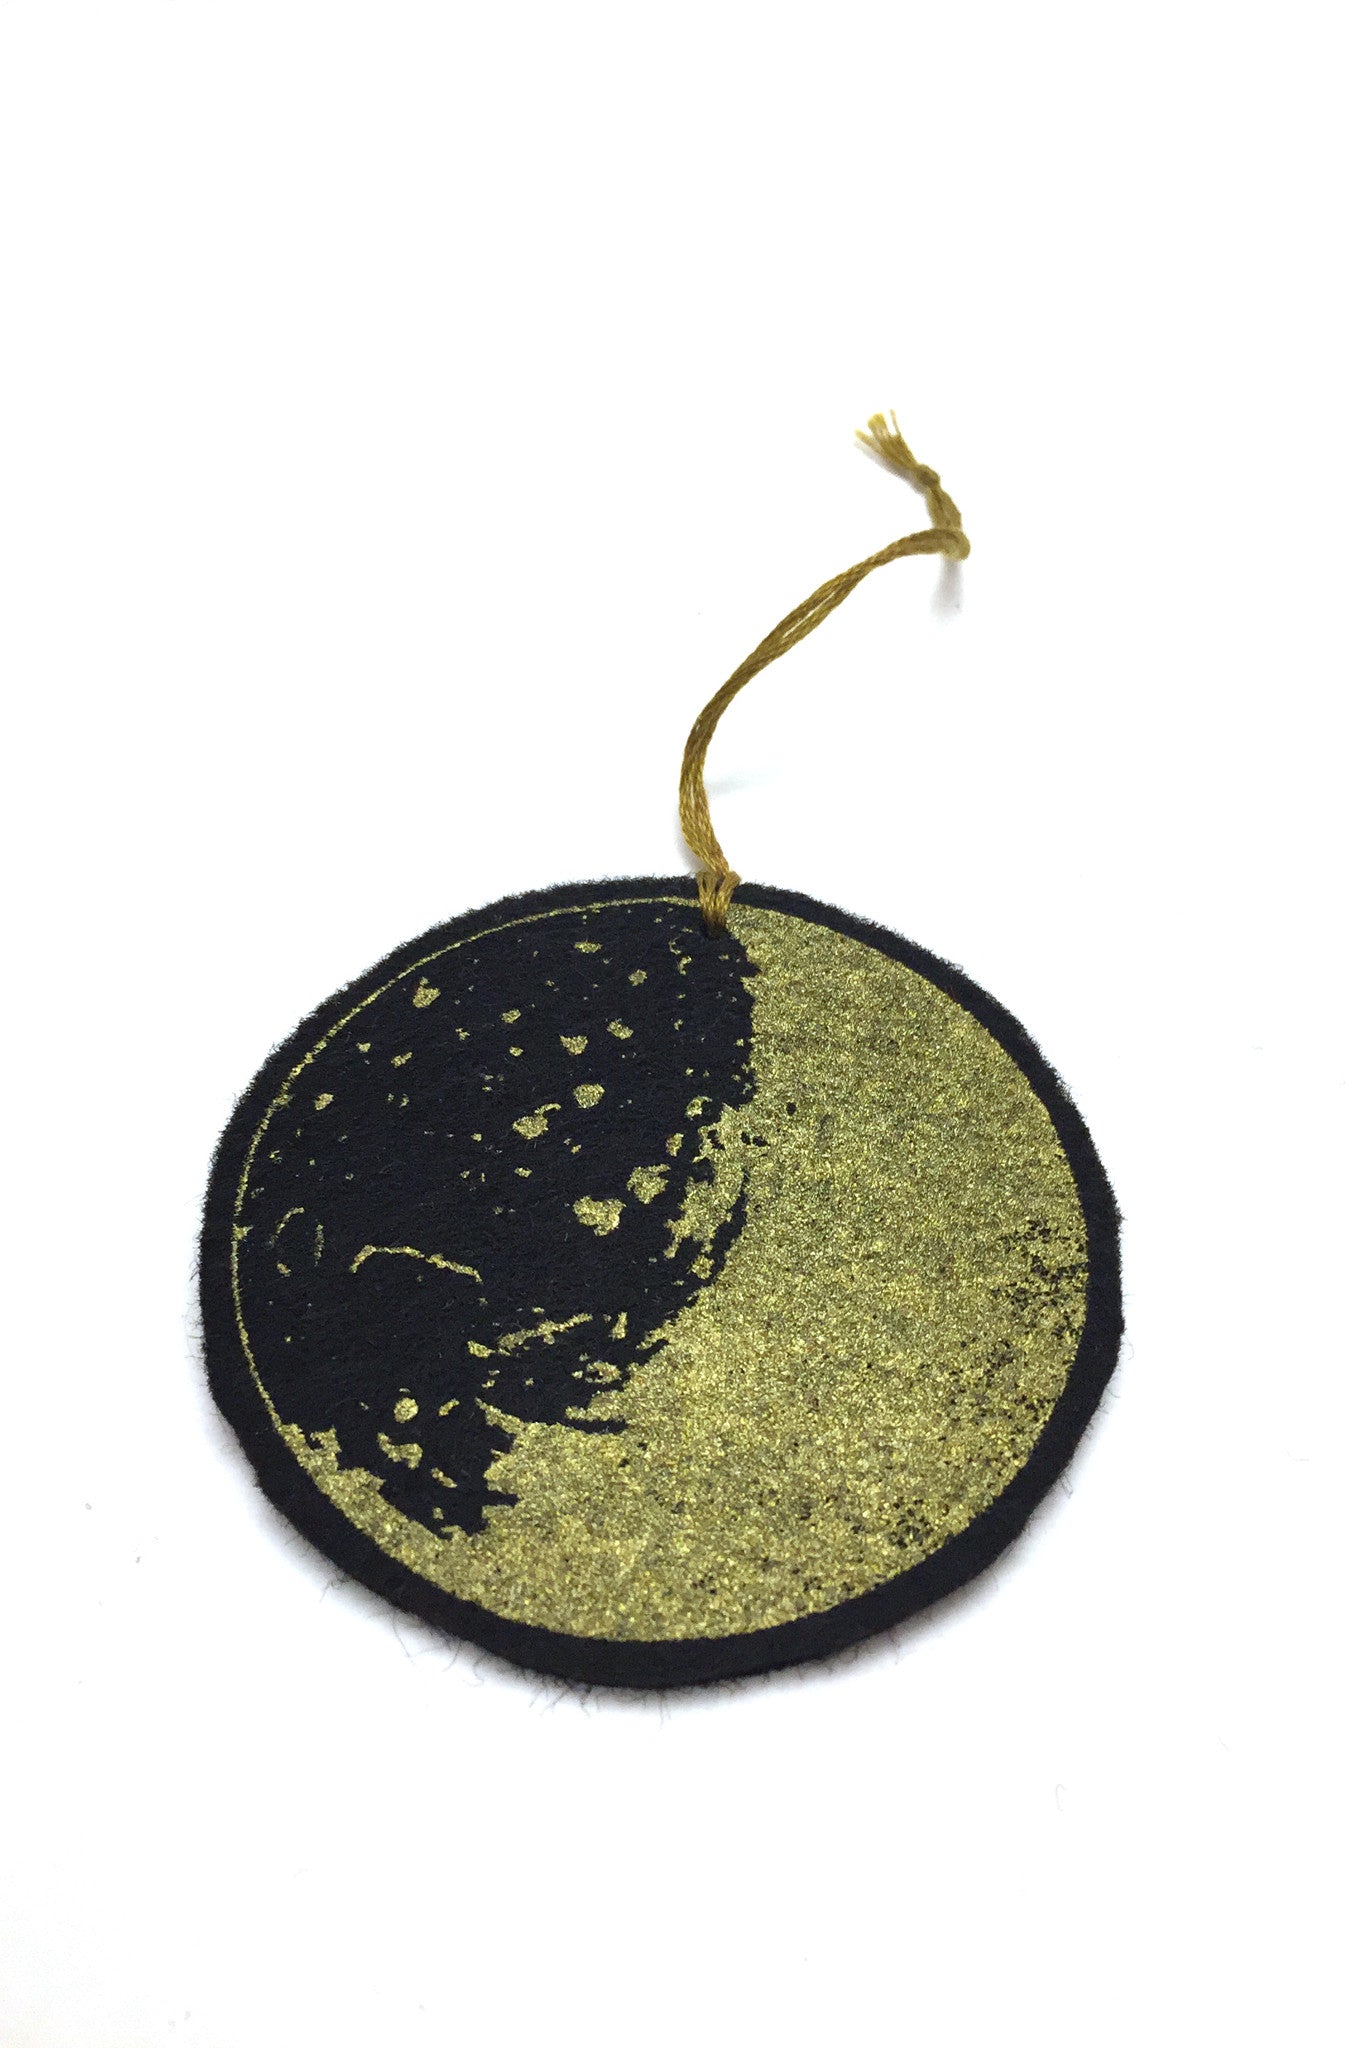 Workshop handmade silkscreen ornament sets, 3 black moons. made in Ottawa Canada